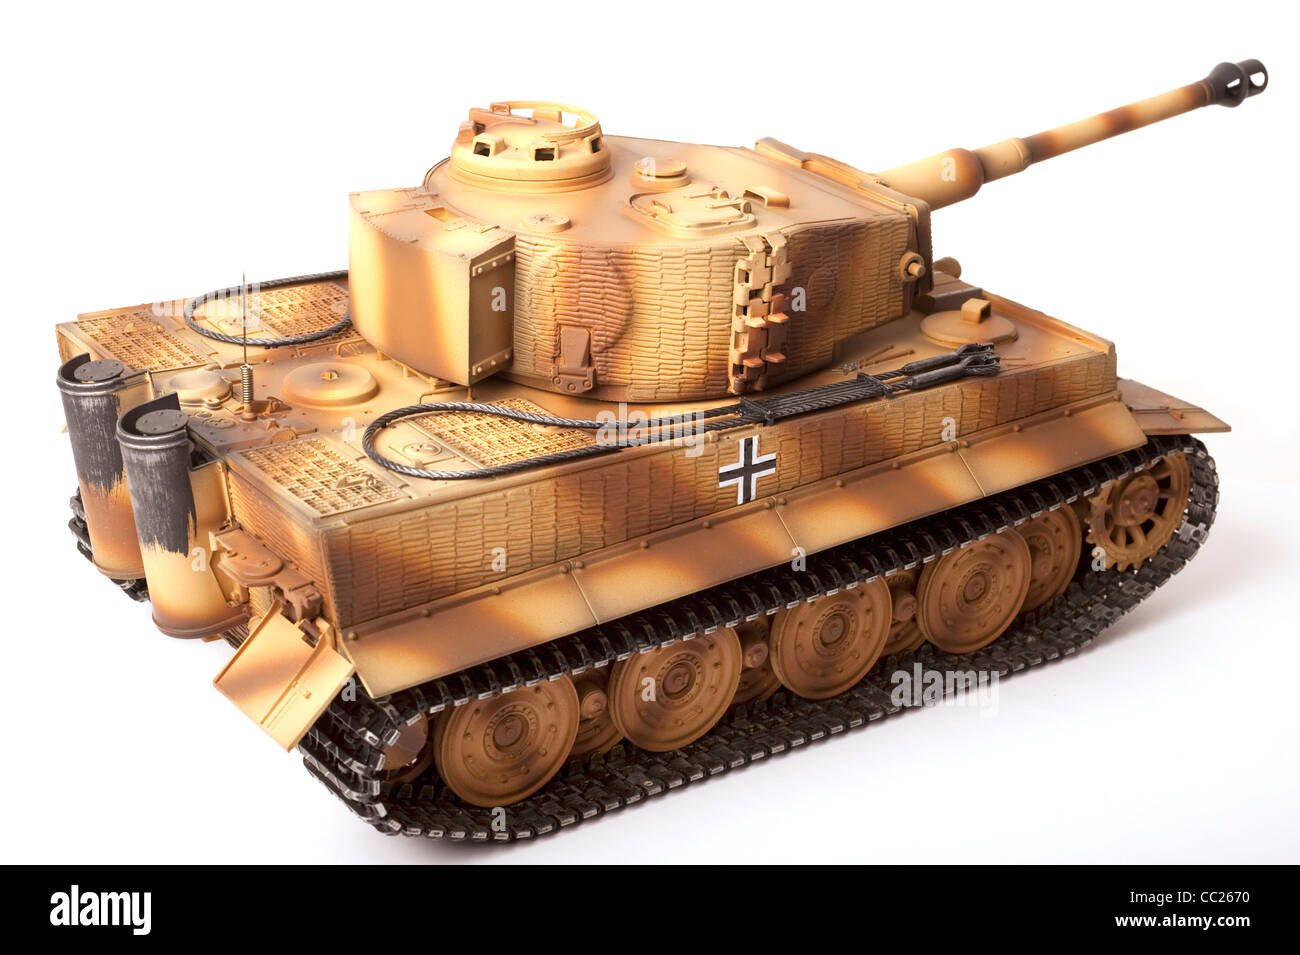 Cc60514 Panzerkampfwagen Vi Tiger Ausf E Late Production Turret